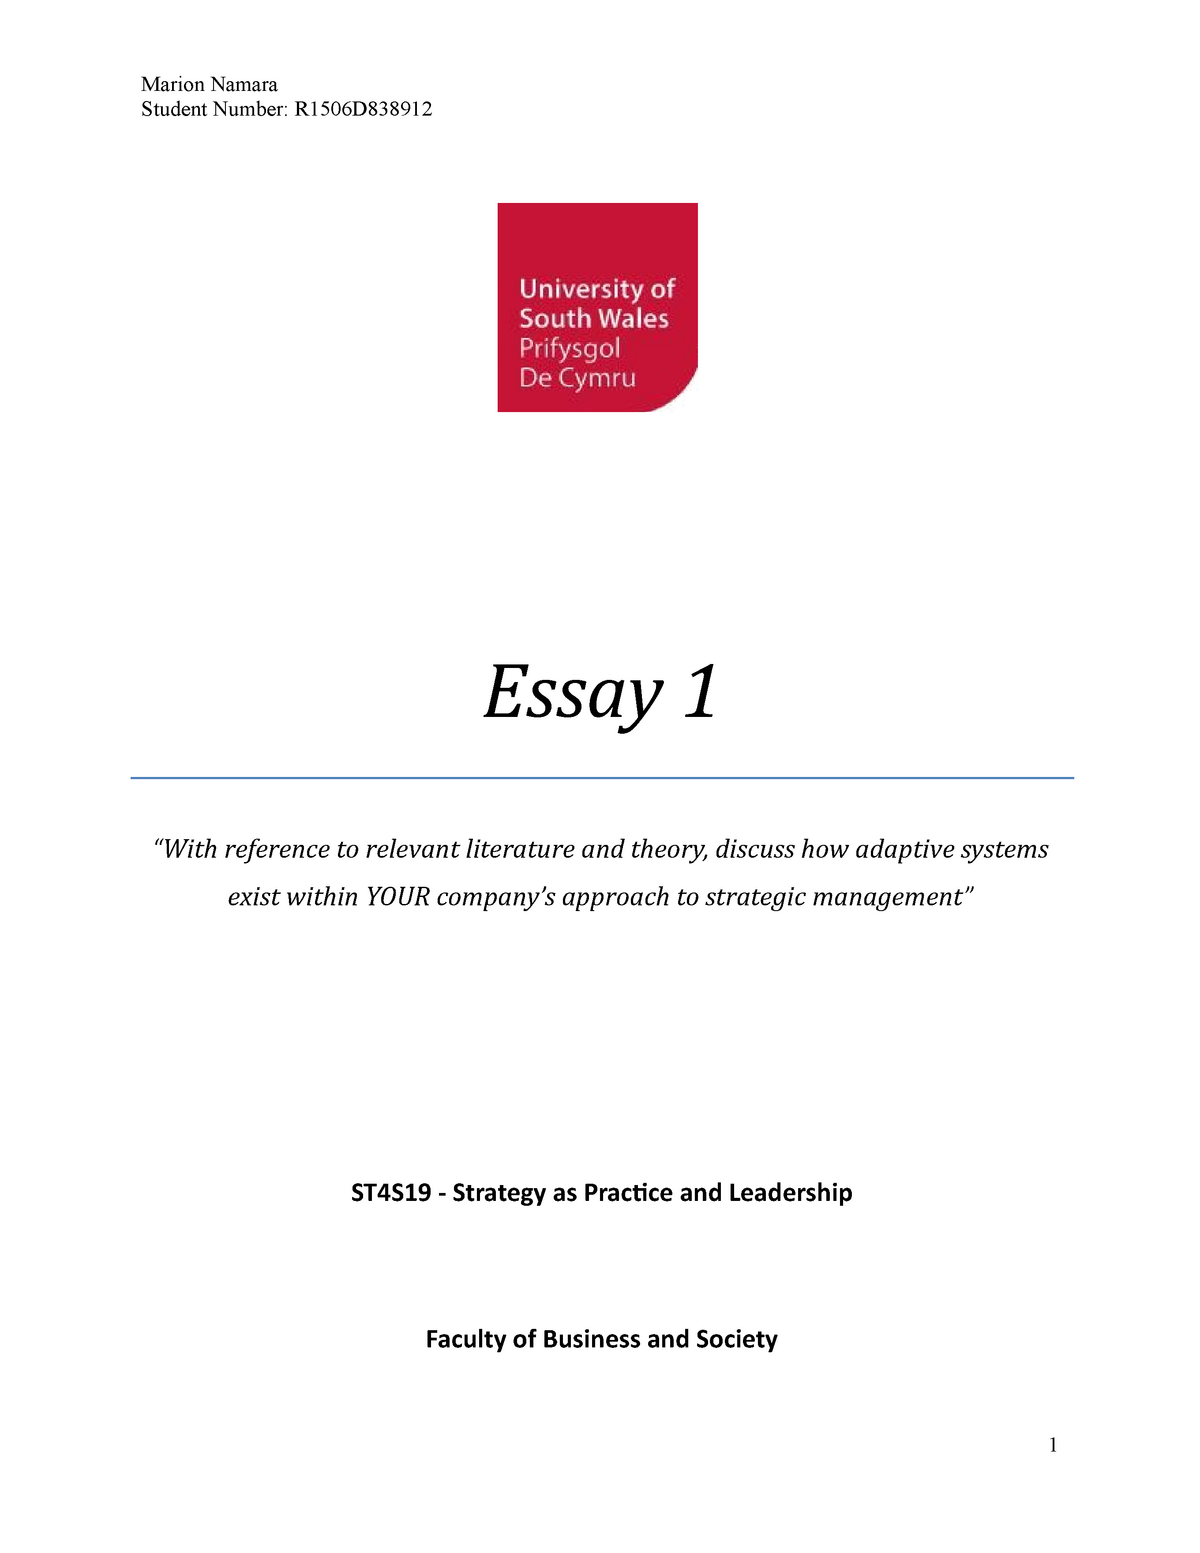 strategic management essay structure